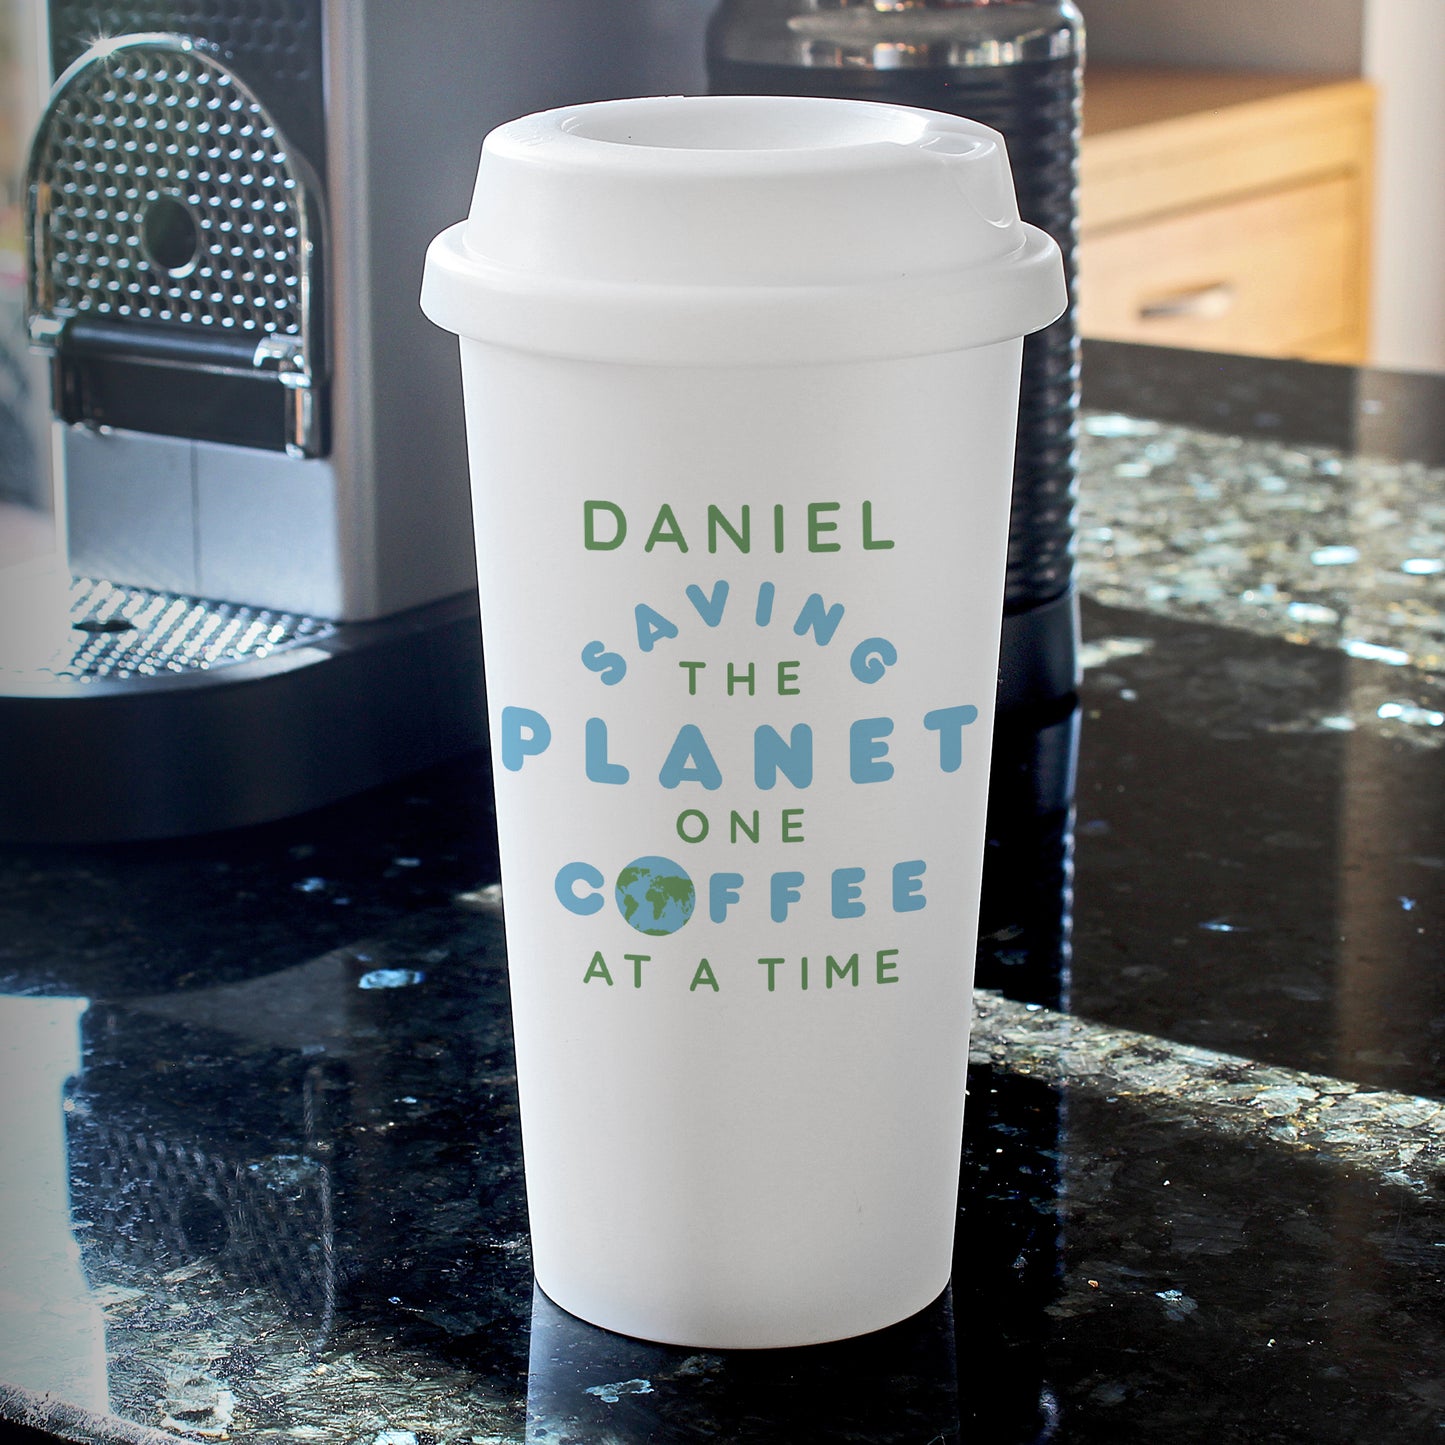 Personalised 'Saving the Planet' Double Walled Plastic Travel Mug